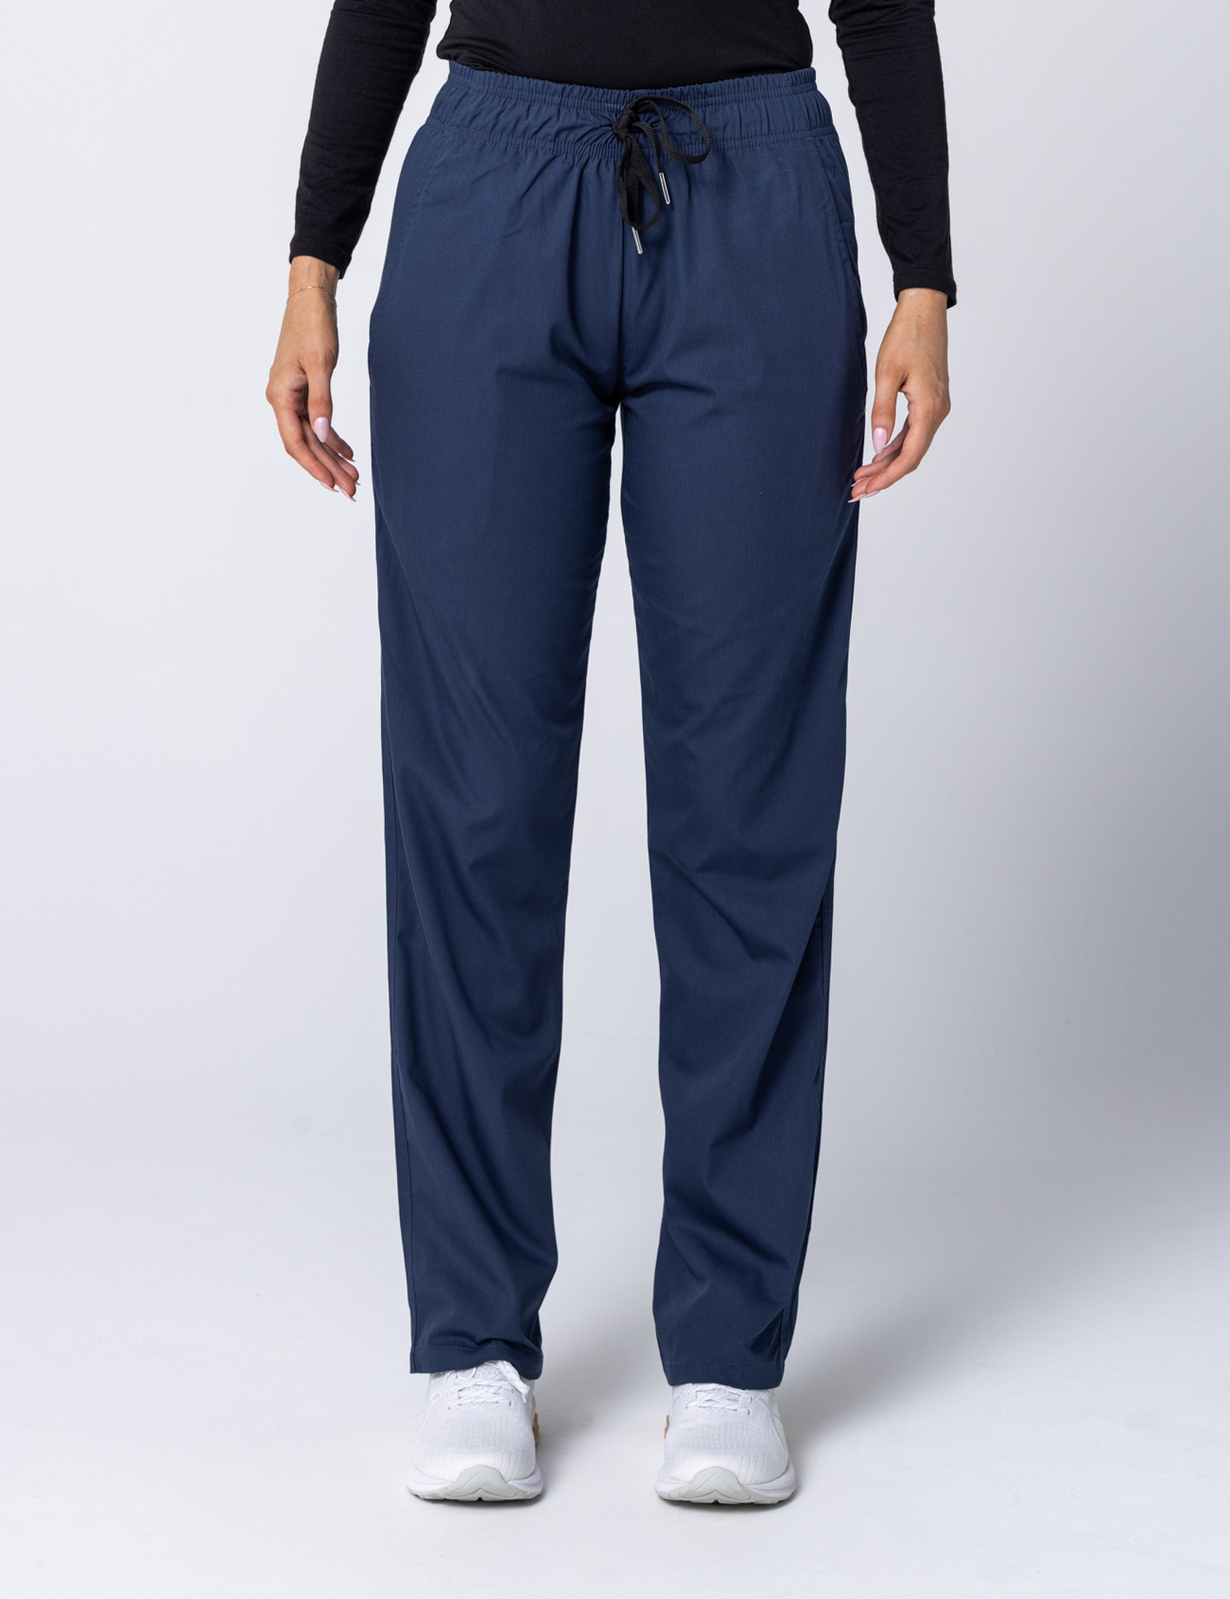 Women's Regular Cut Pants - Navy - Large